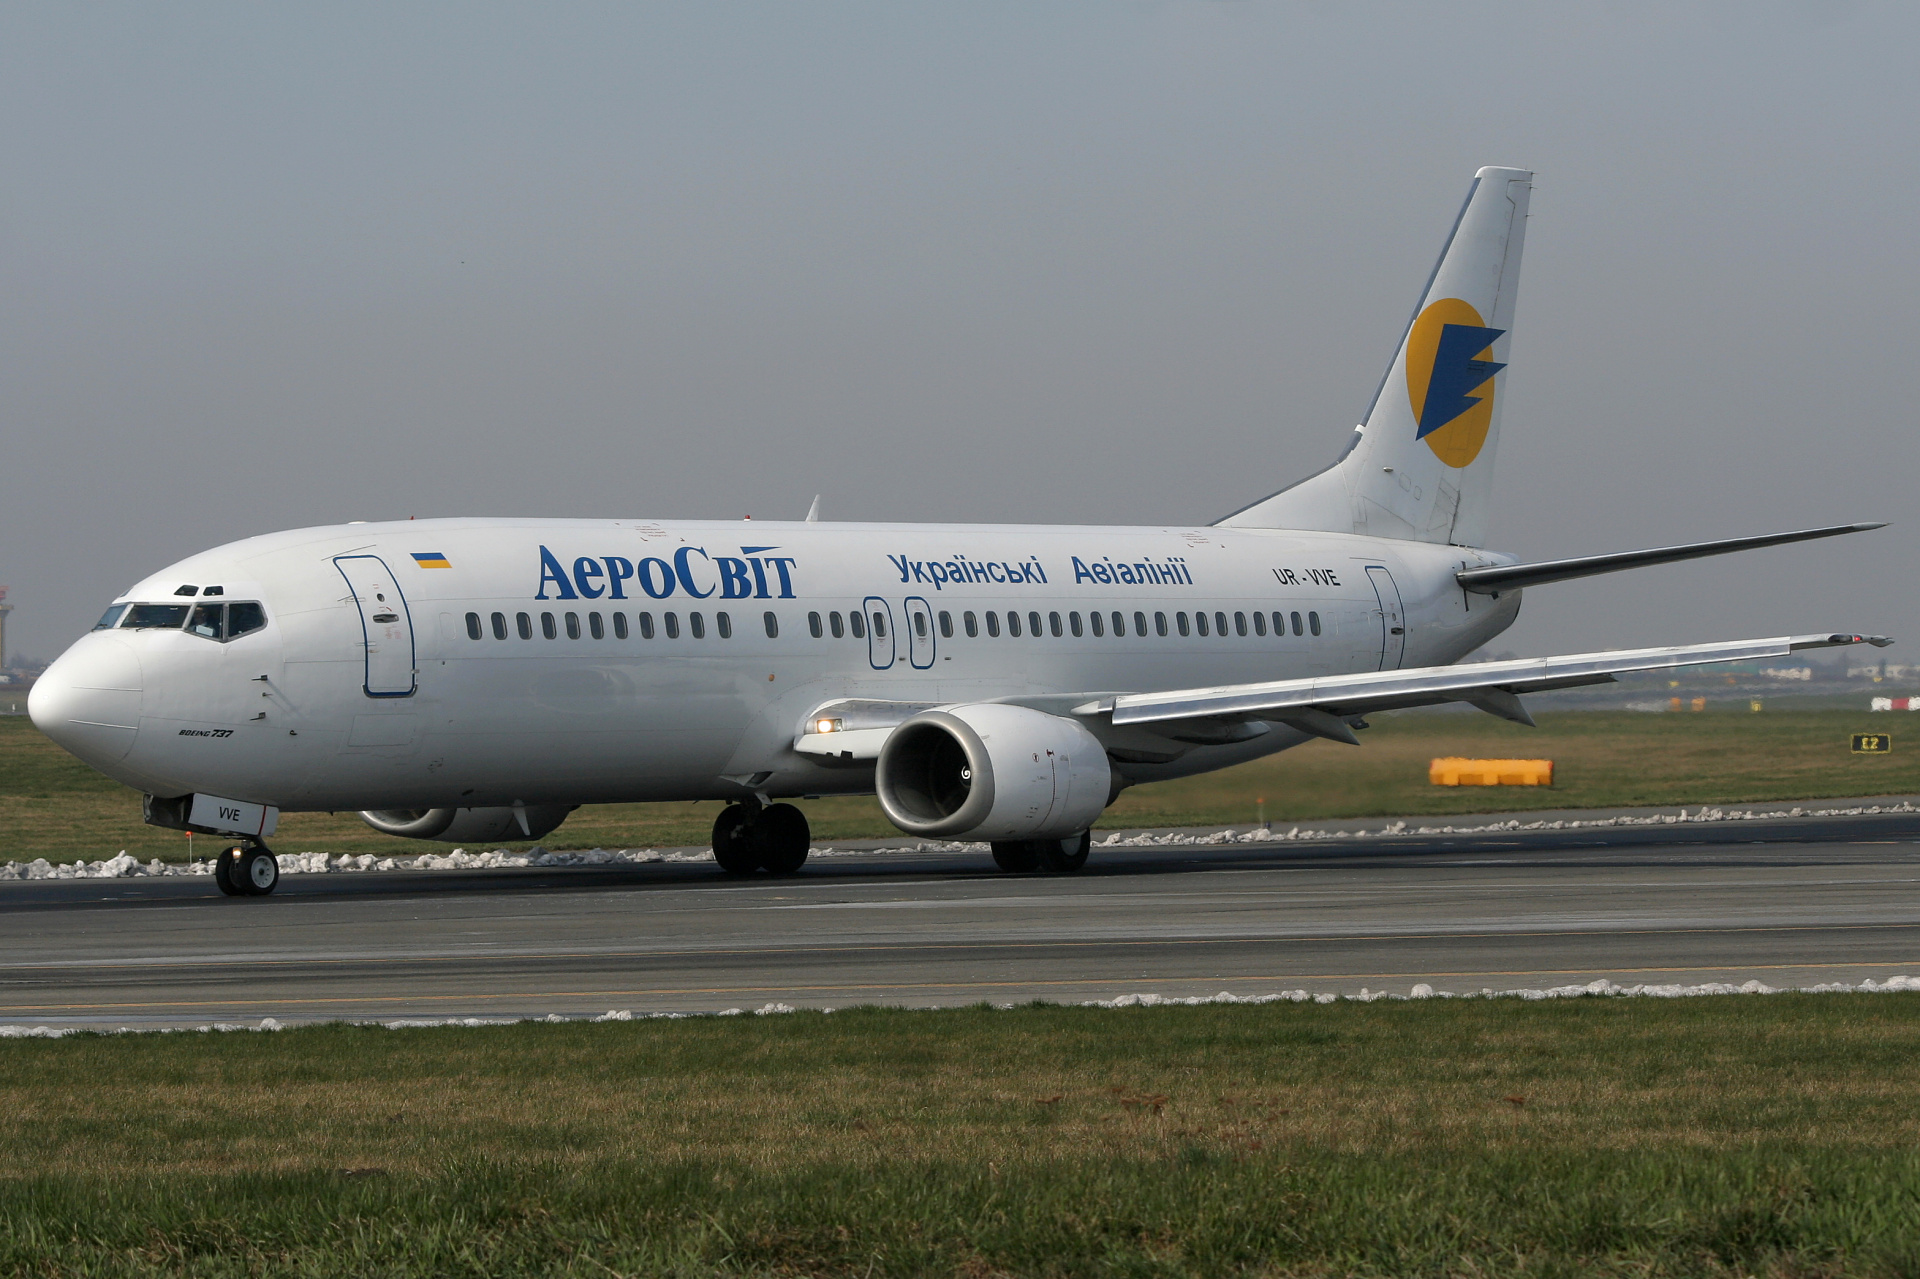 UR-VVE, AeroSvit Ukrainian Airlines (Aircraft » EPWA Spotting » Boeing 737-400)